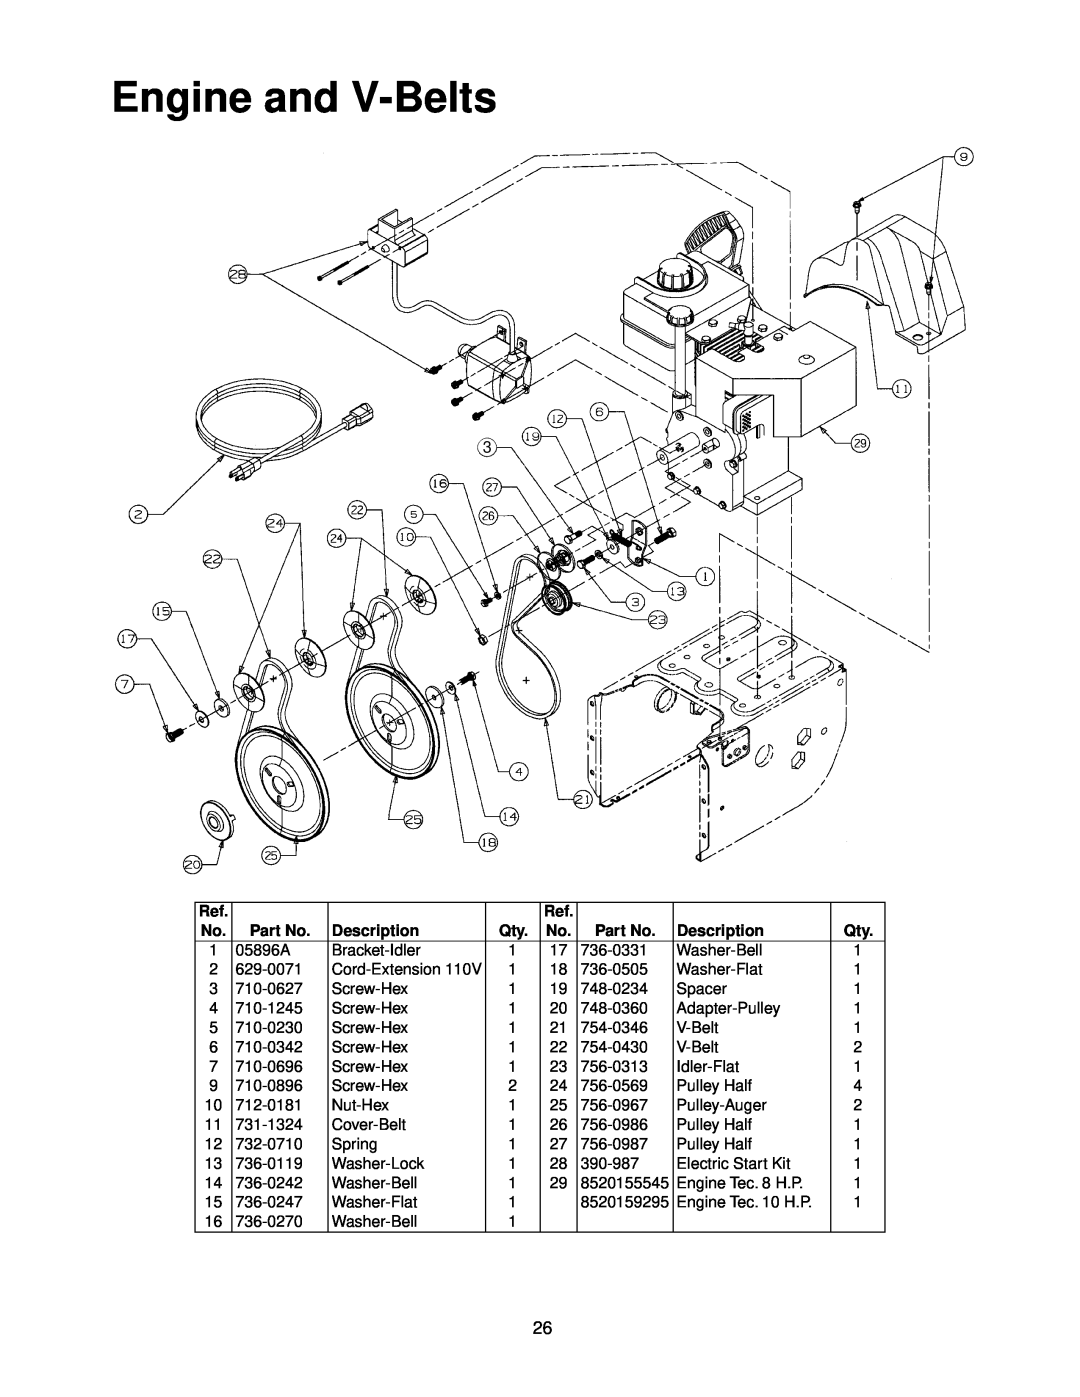 MTD E740, E760 manual Engine and V-Belts, Description 